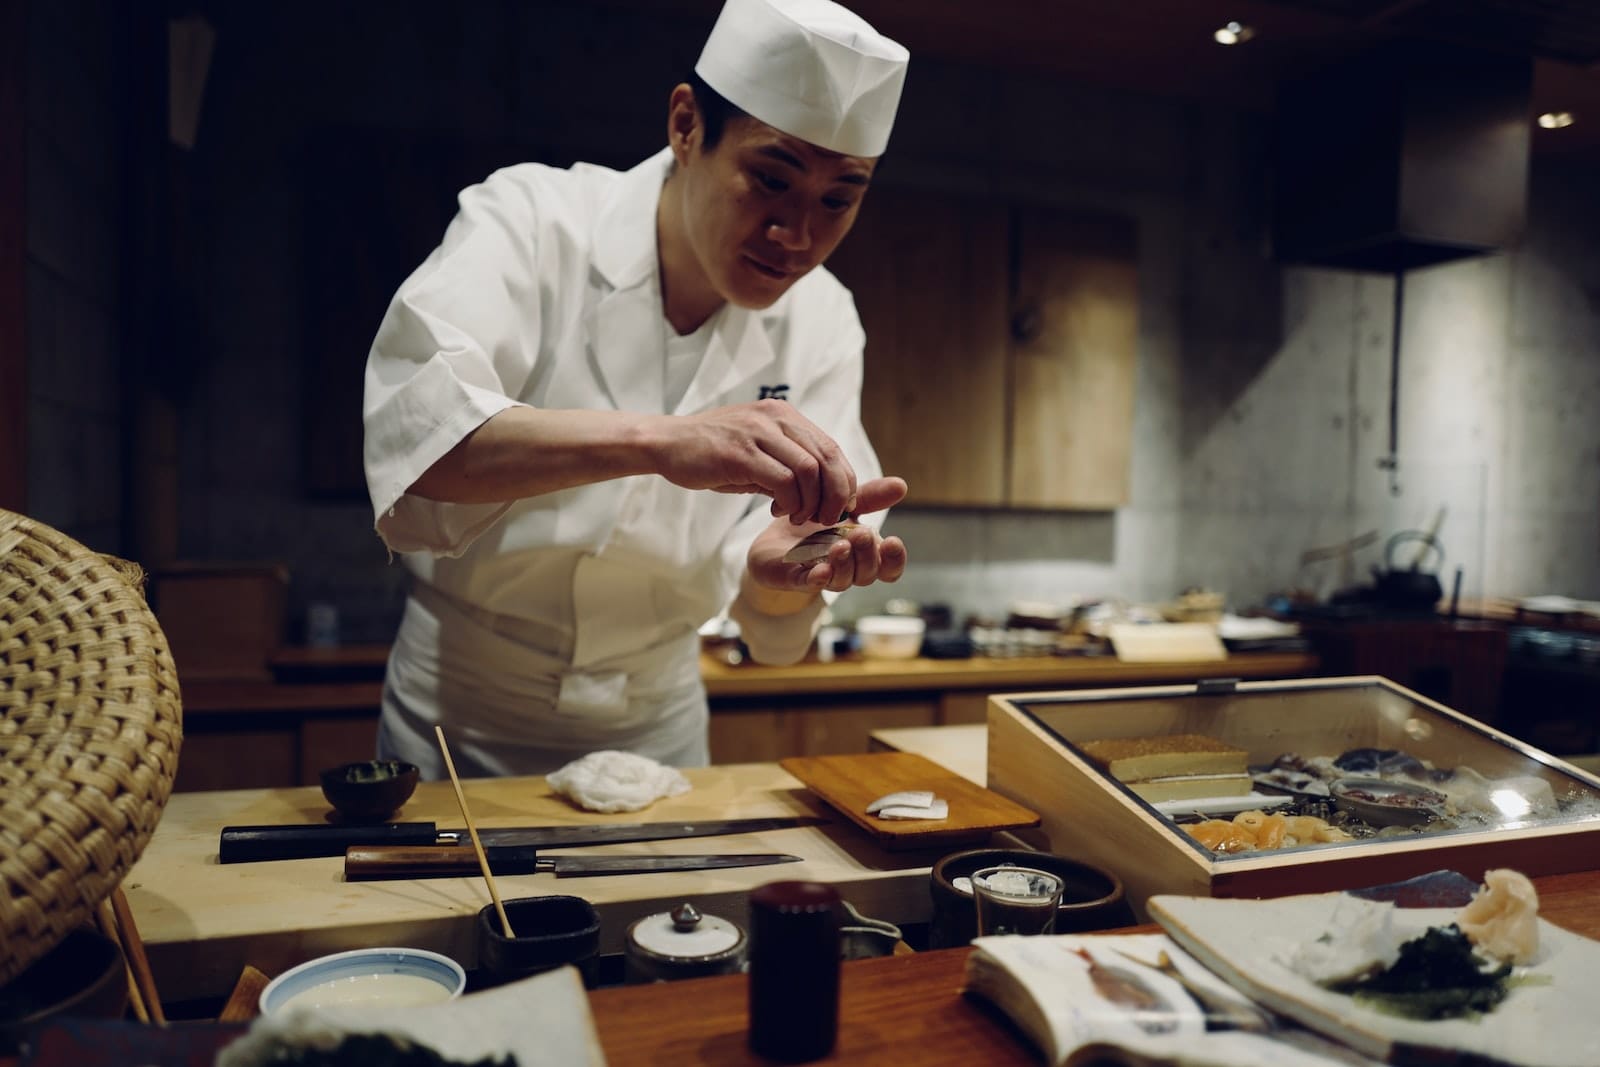 Sushi chef preparing nigiri, sashimi and other sushi for guests.